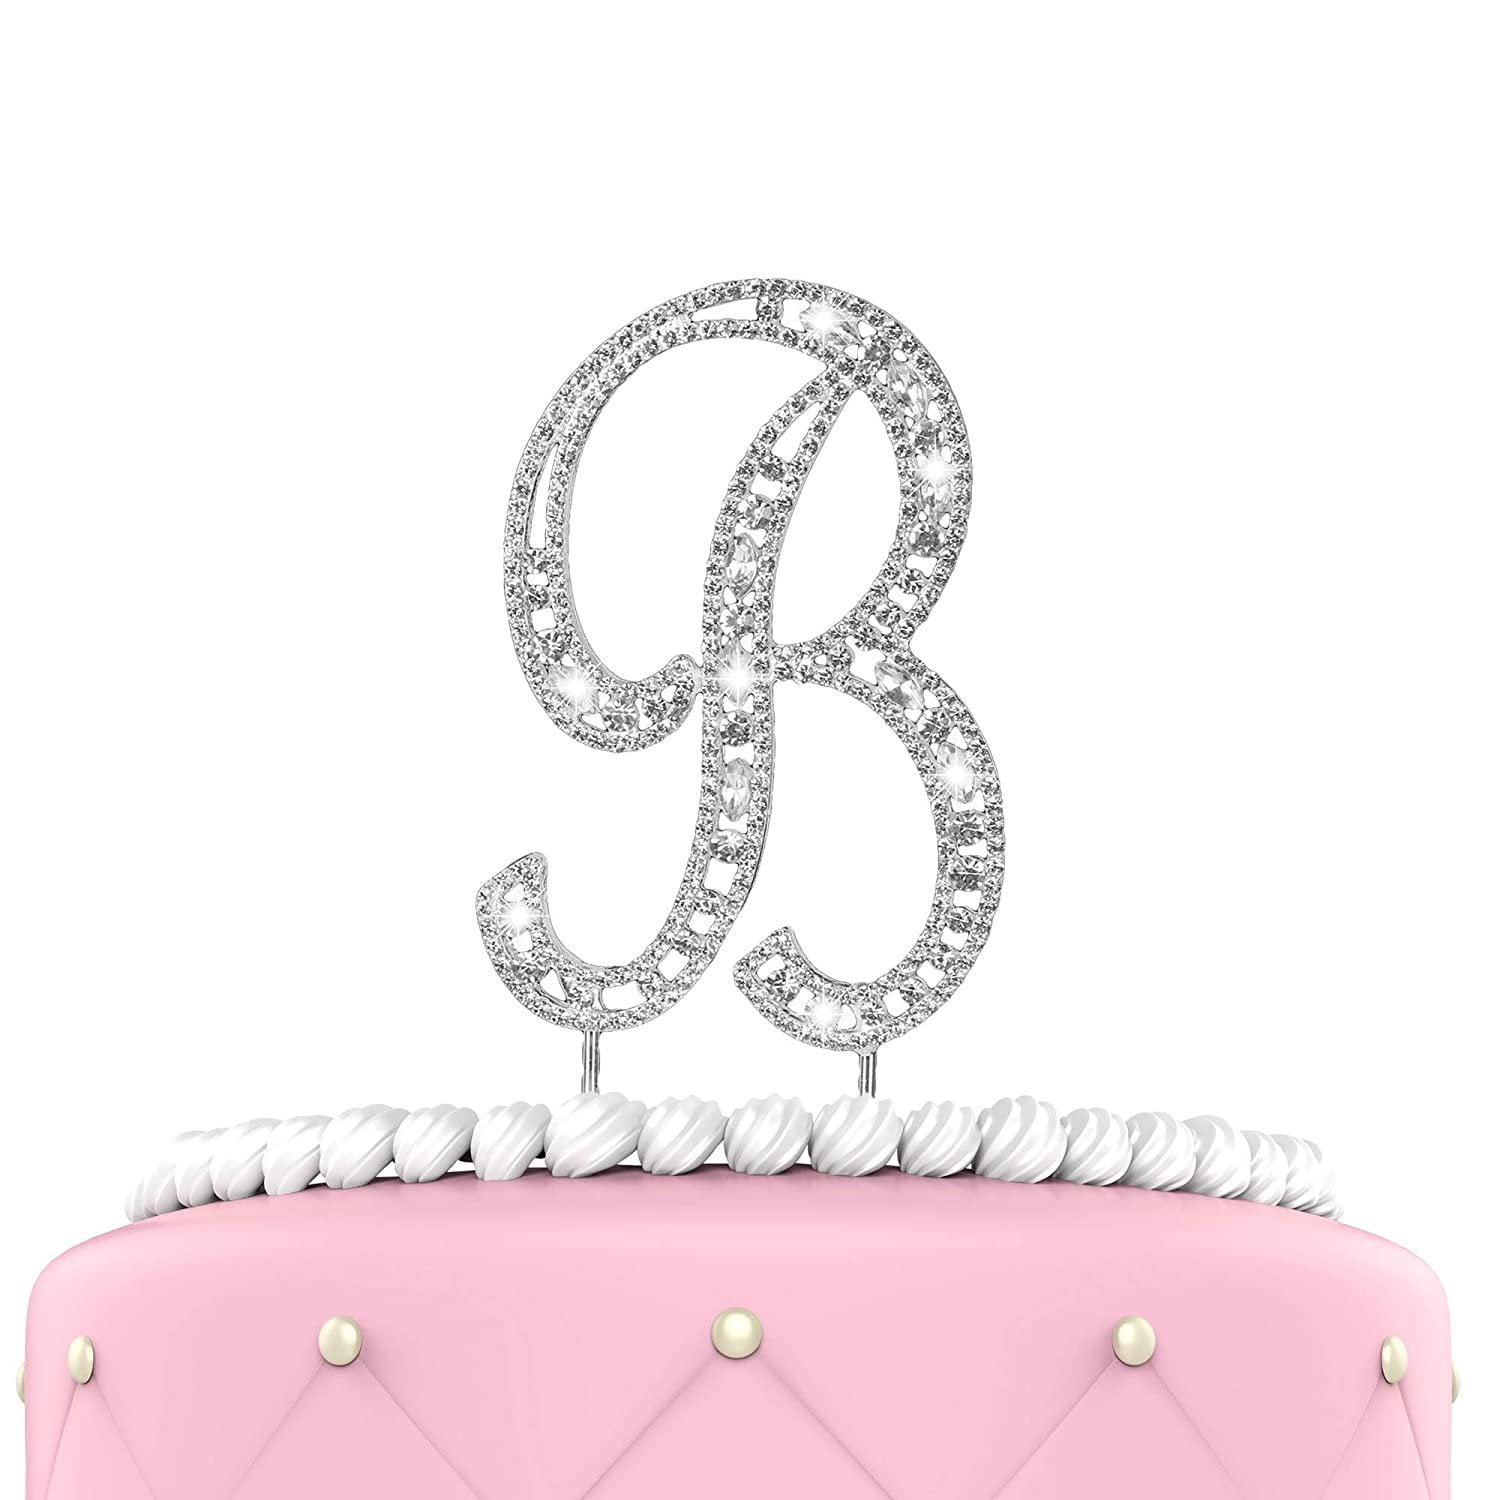 Small Silver Rhinestone Bling Monogram Letter Initial Cake Cupcake Topper Pick 